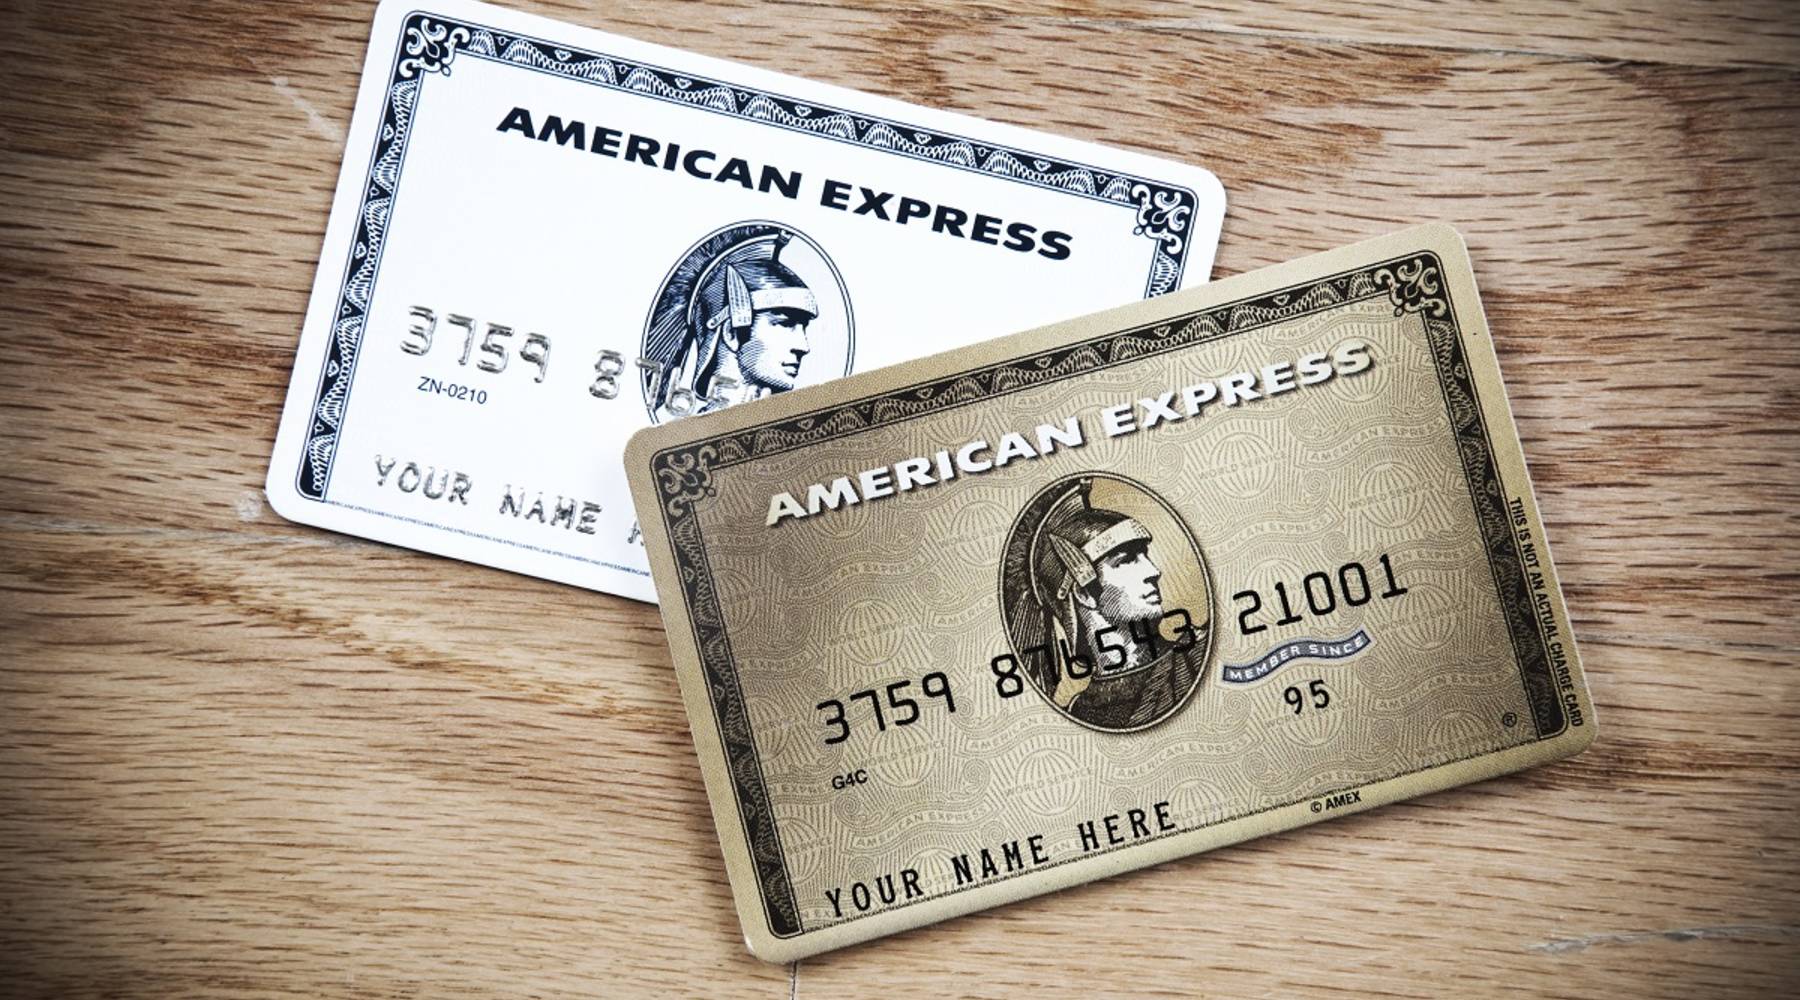 Credit Cards, Travel, Rewards, Business - wide 4